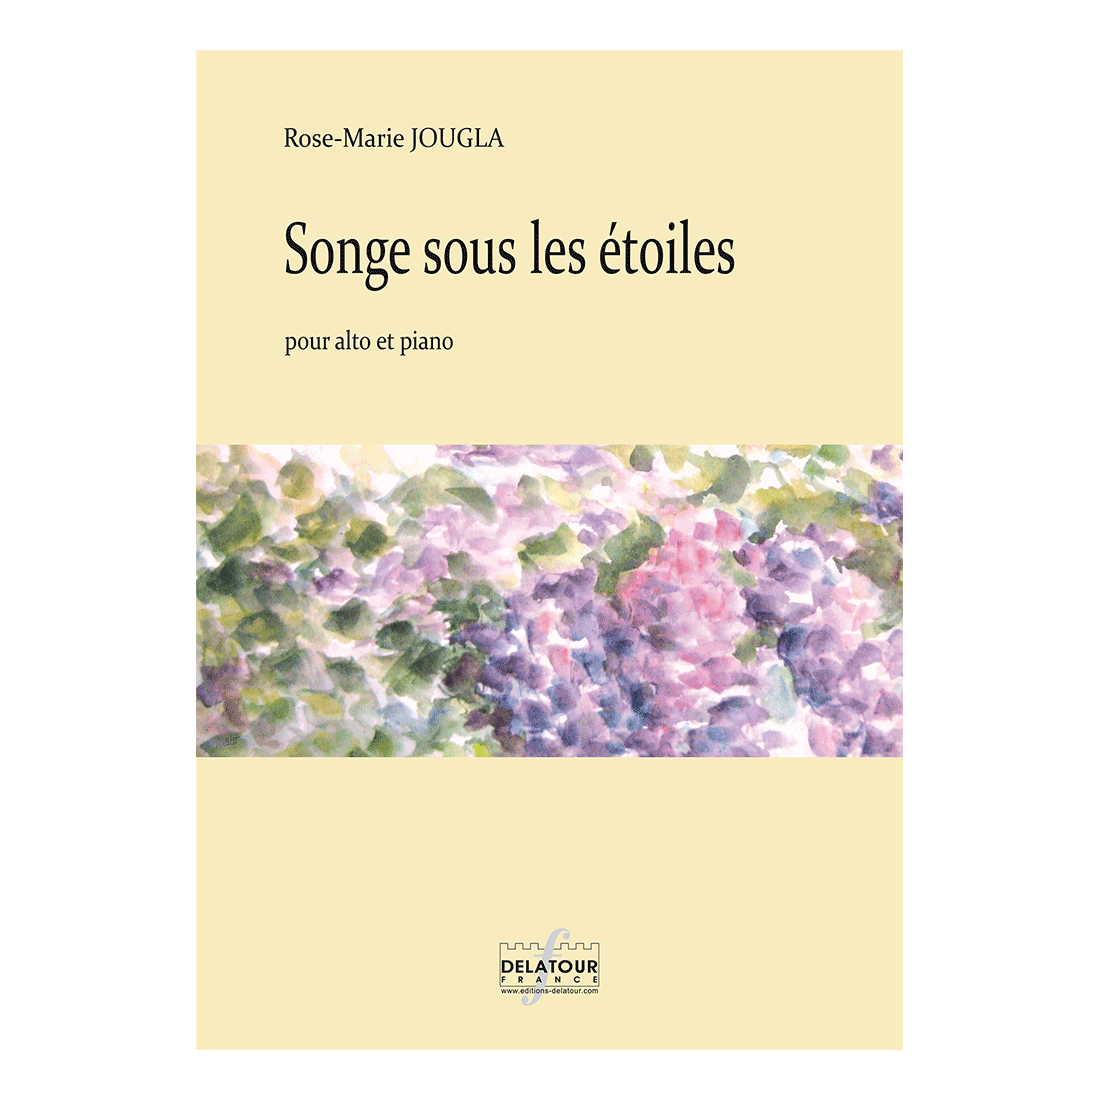 Songe sous les étoiles for viola and piano